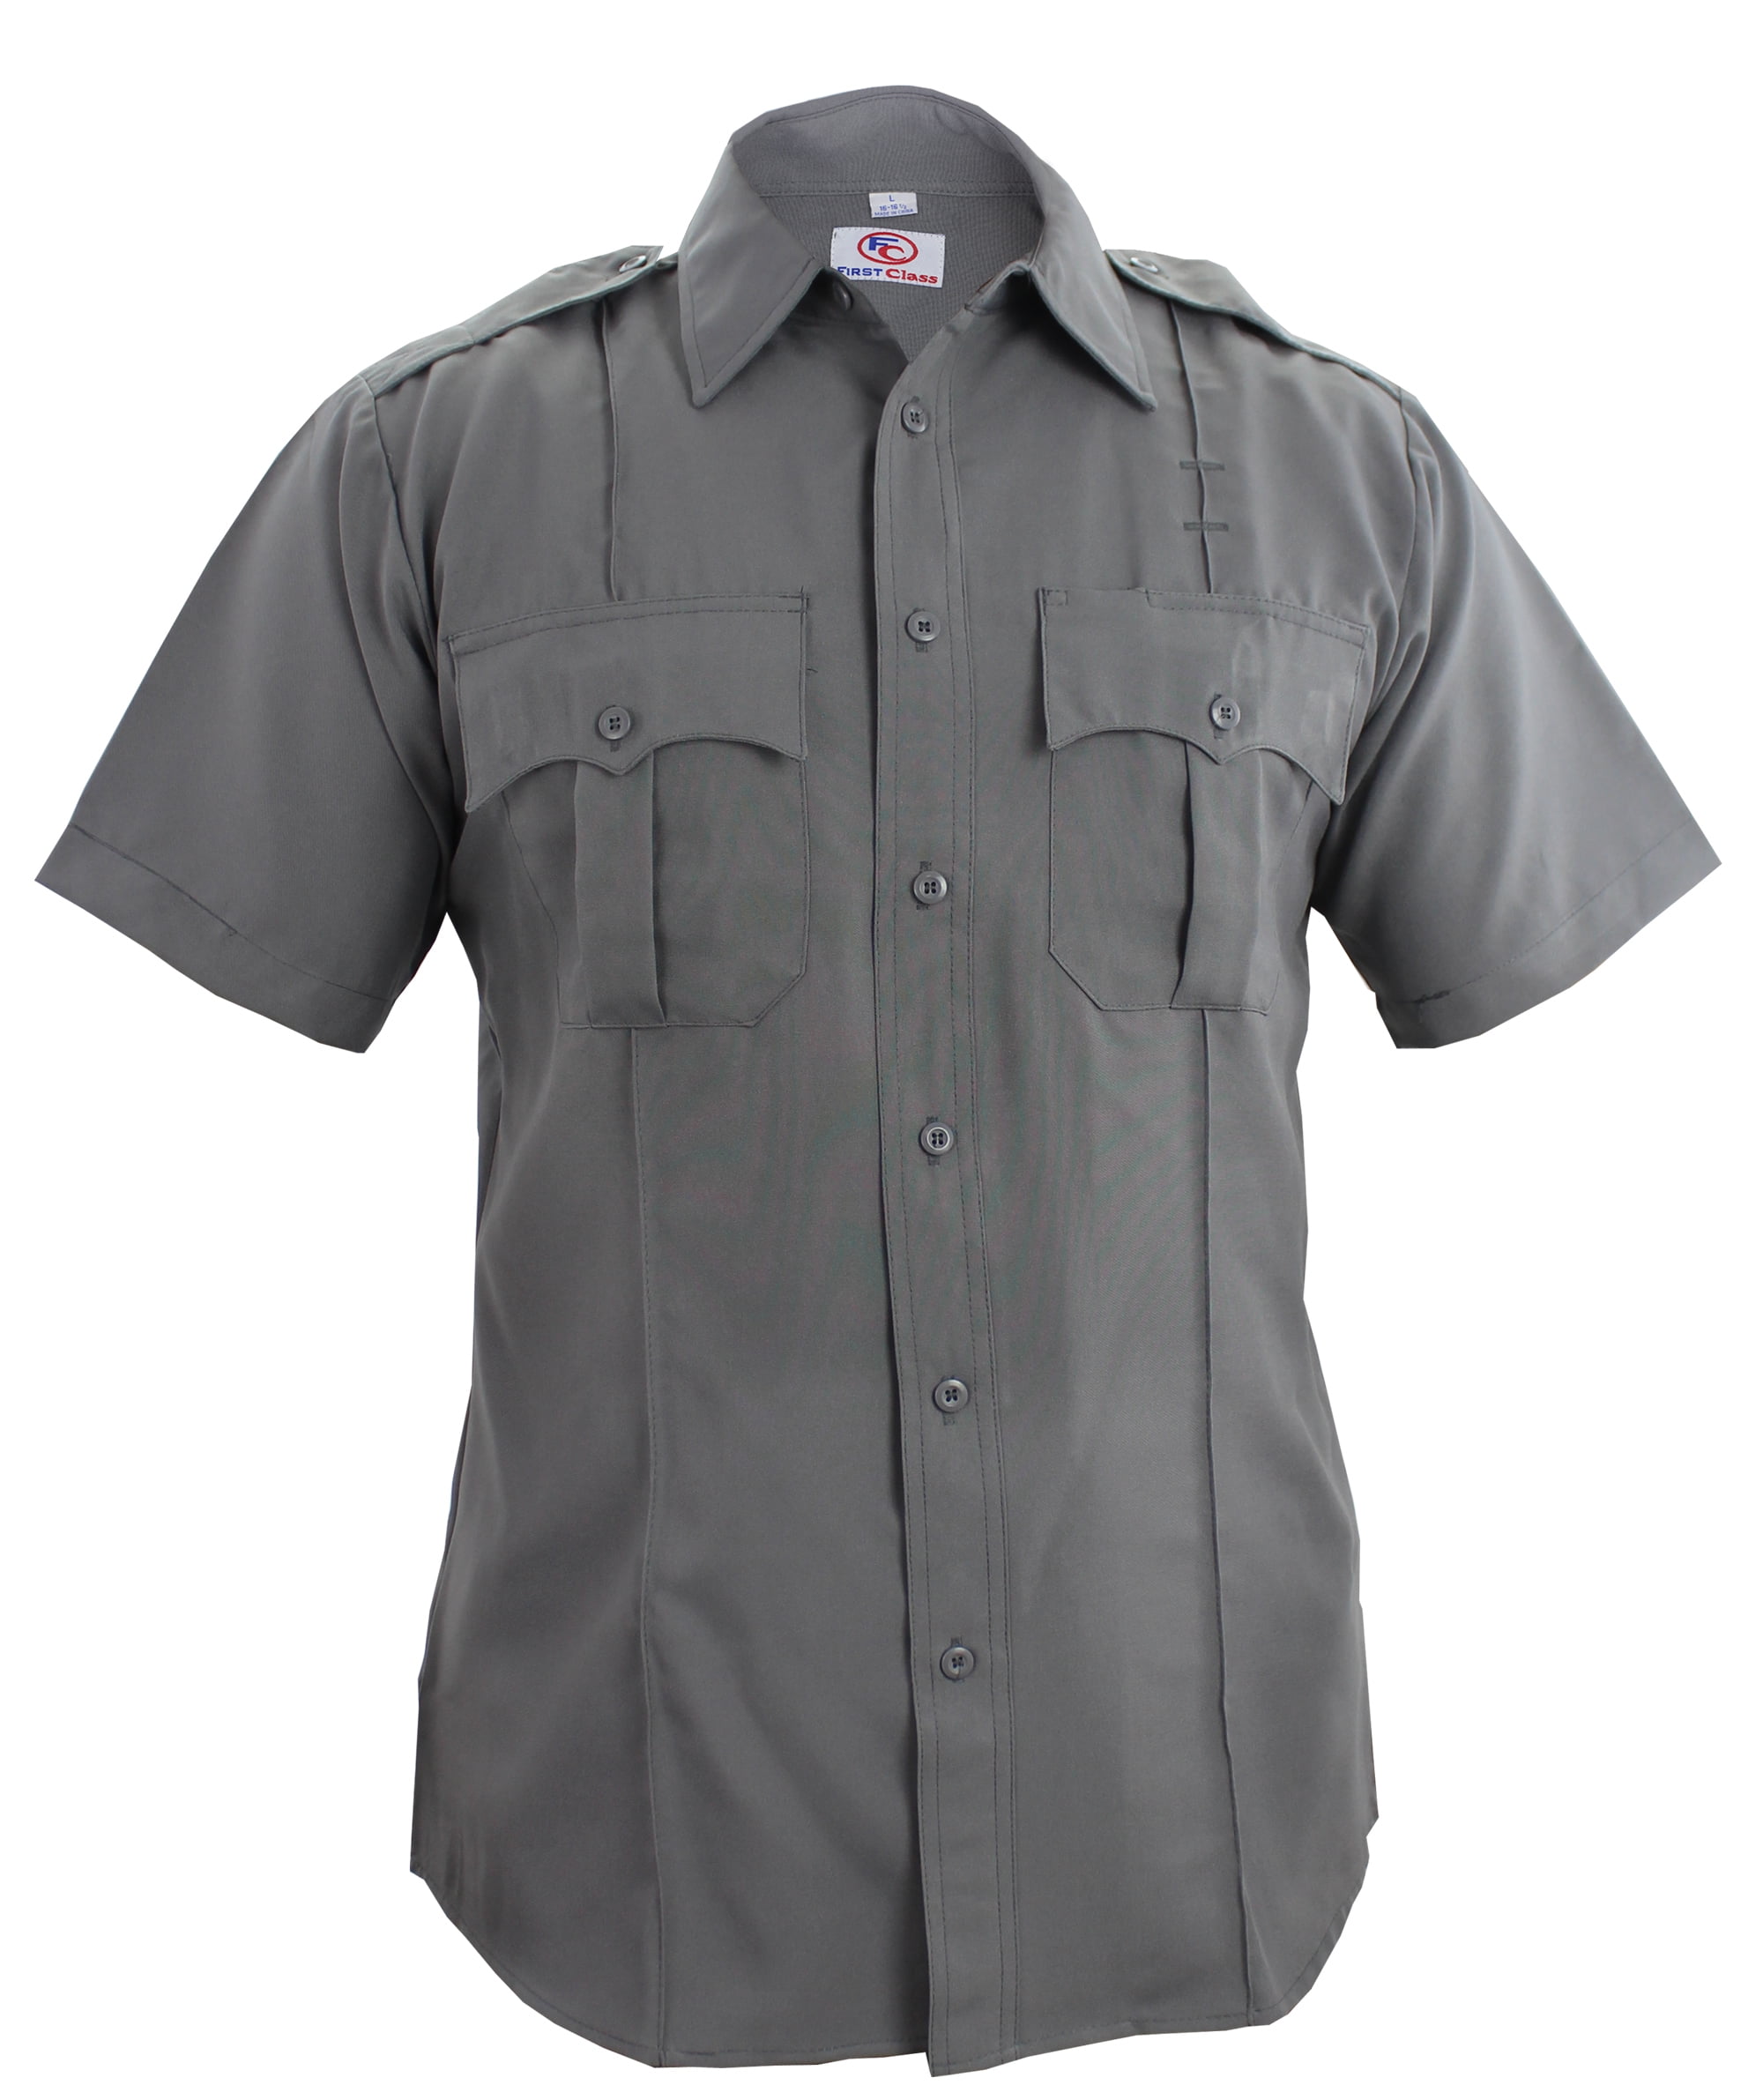 Navy Blue Law Enforcement Security EMT Short Sleeve Uniform Shirt 30020 